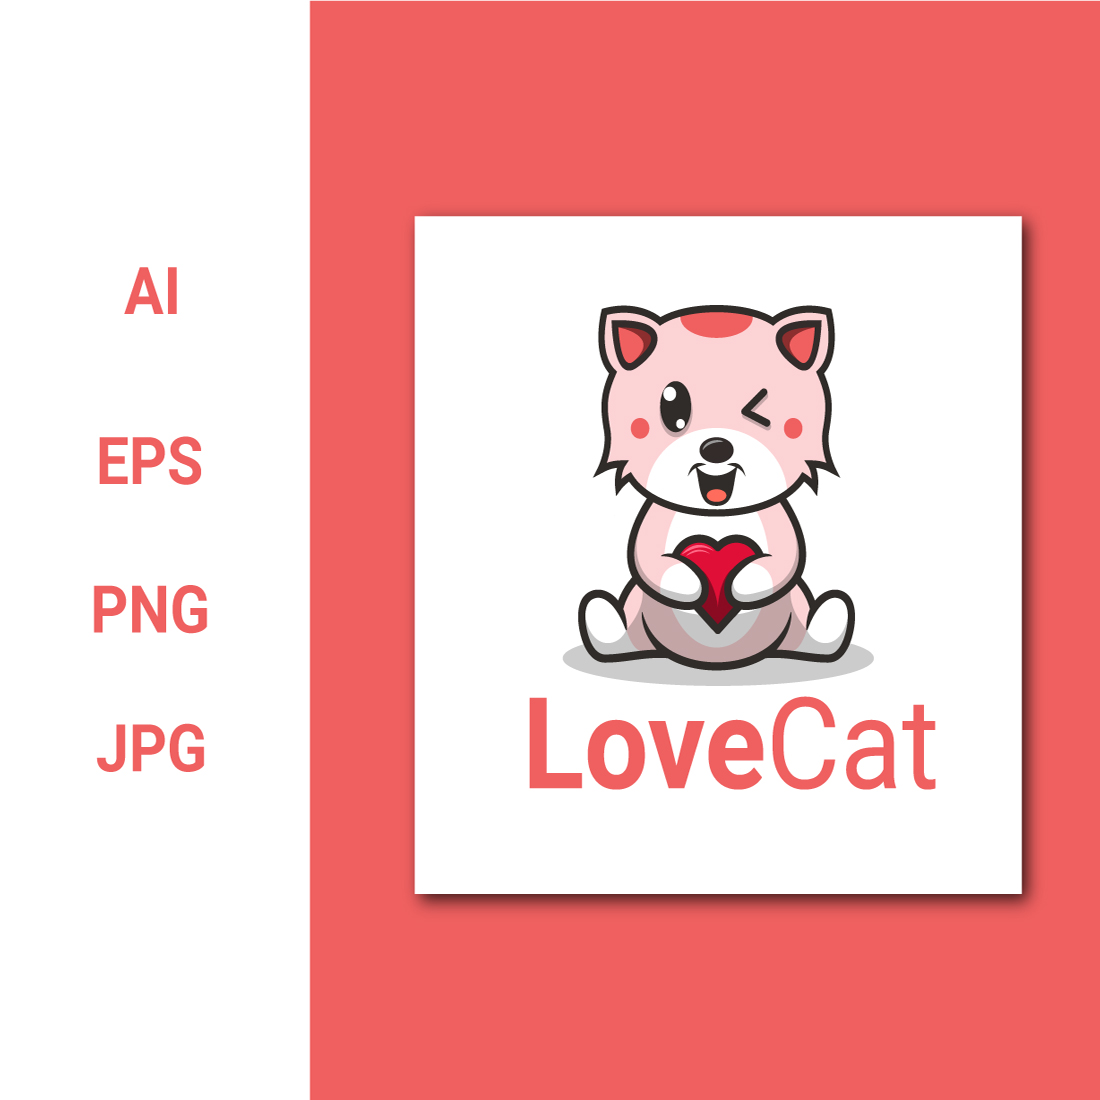 love cat logo cover image.